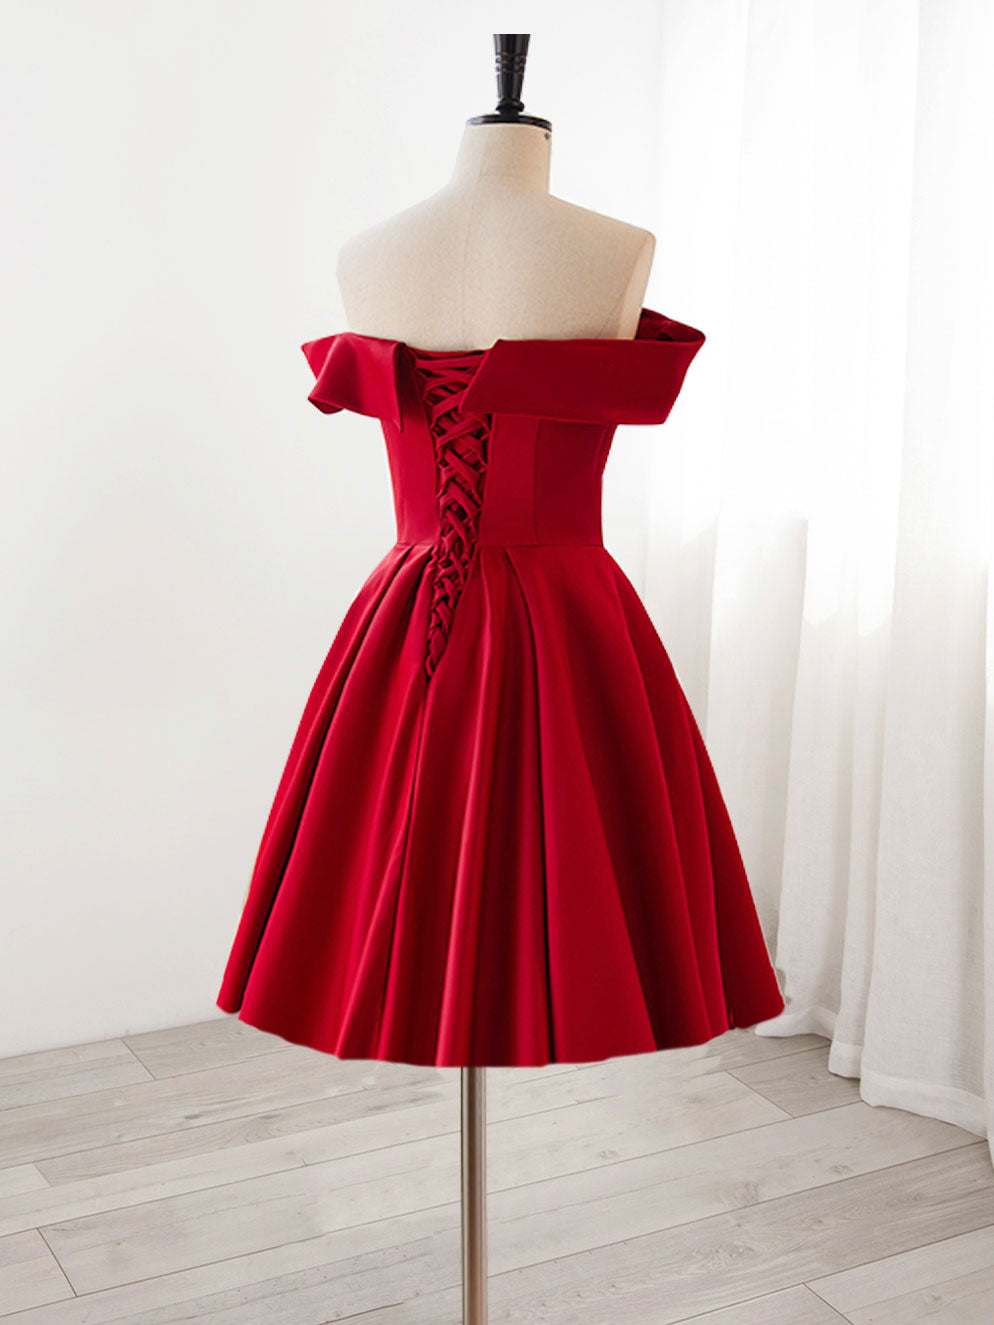 bright red dress